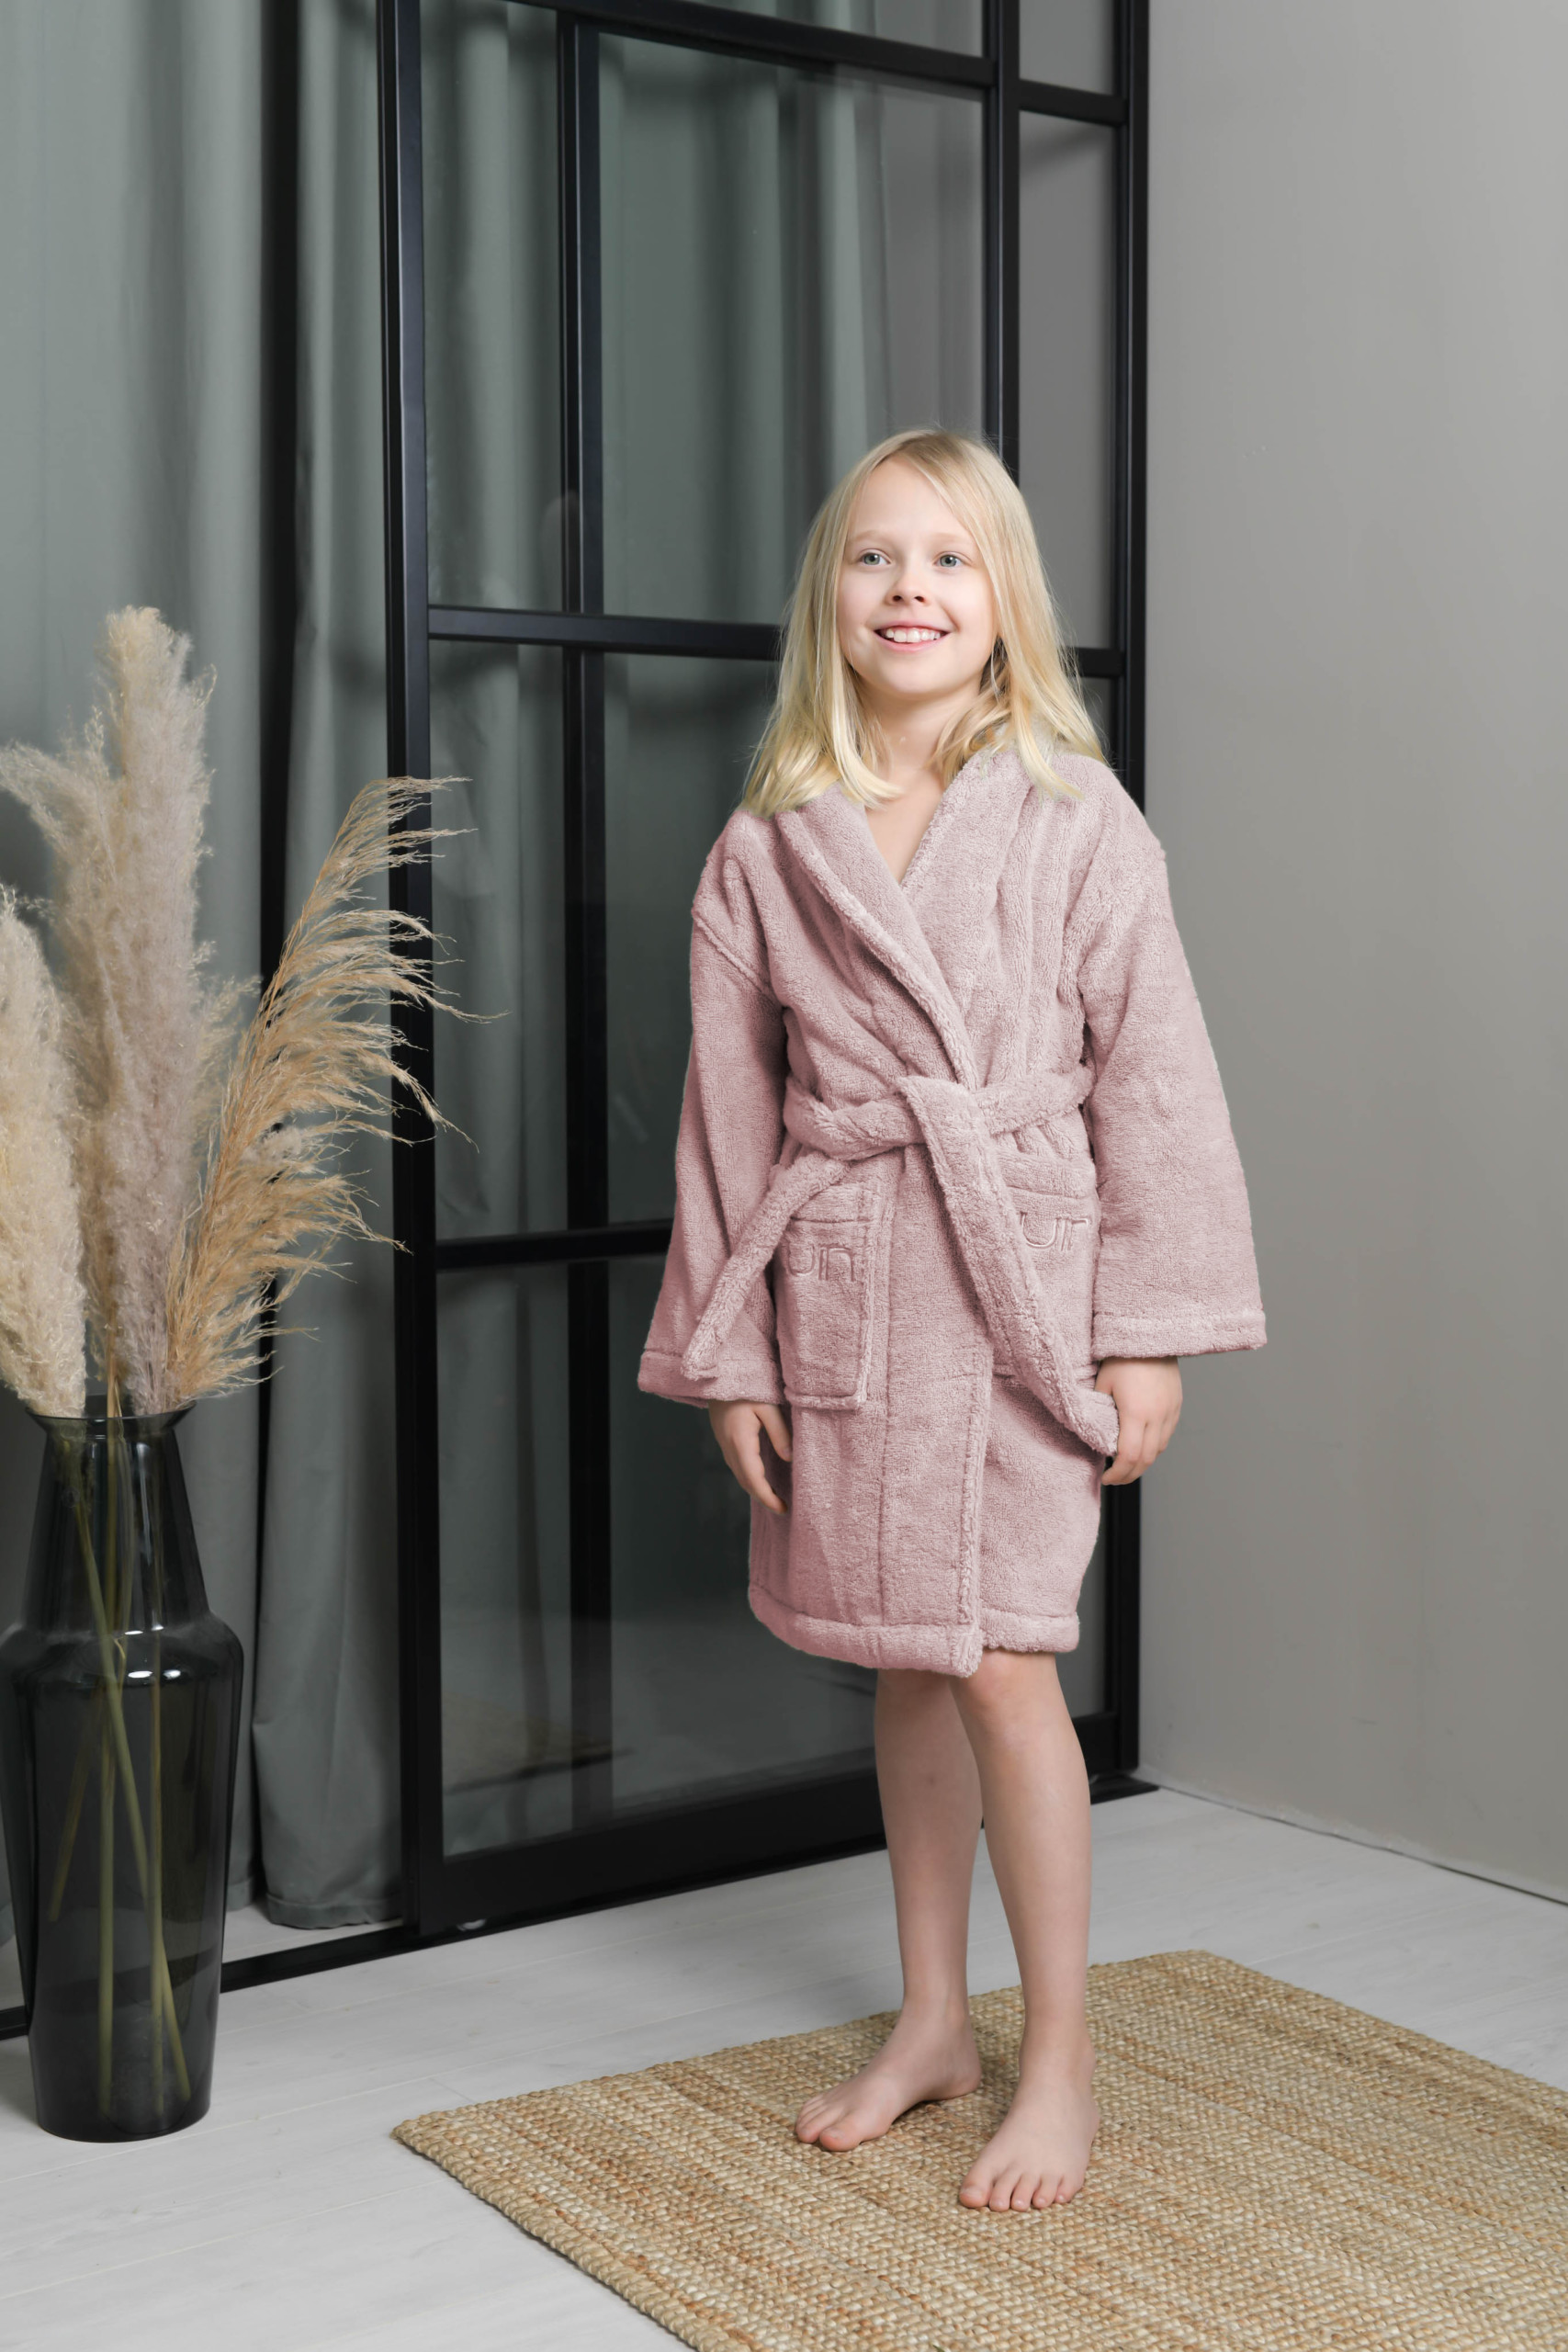 Georg Jensen Damask - Soft bathrobes for children in organic cotton